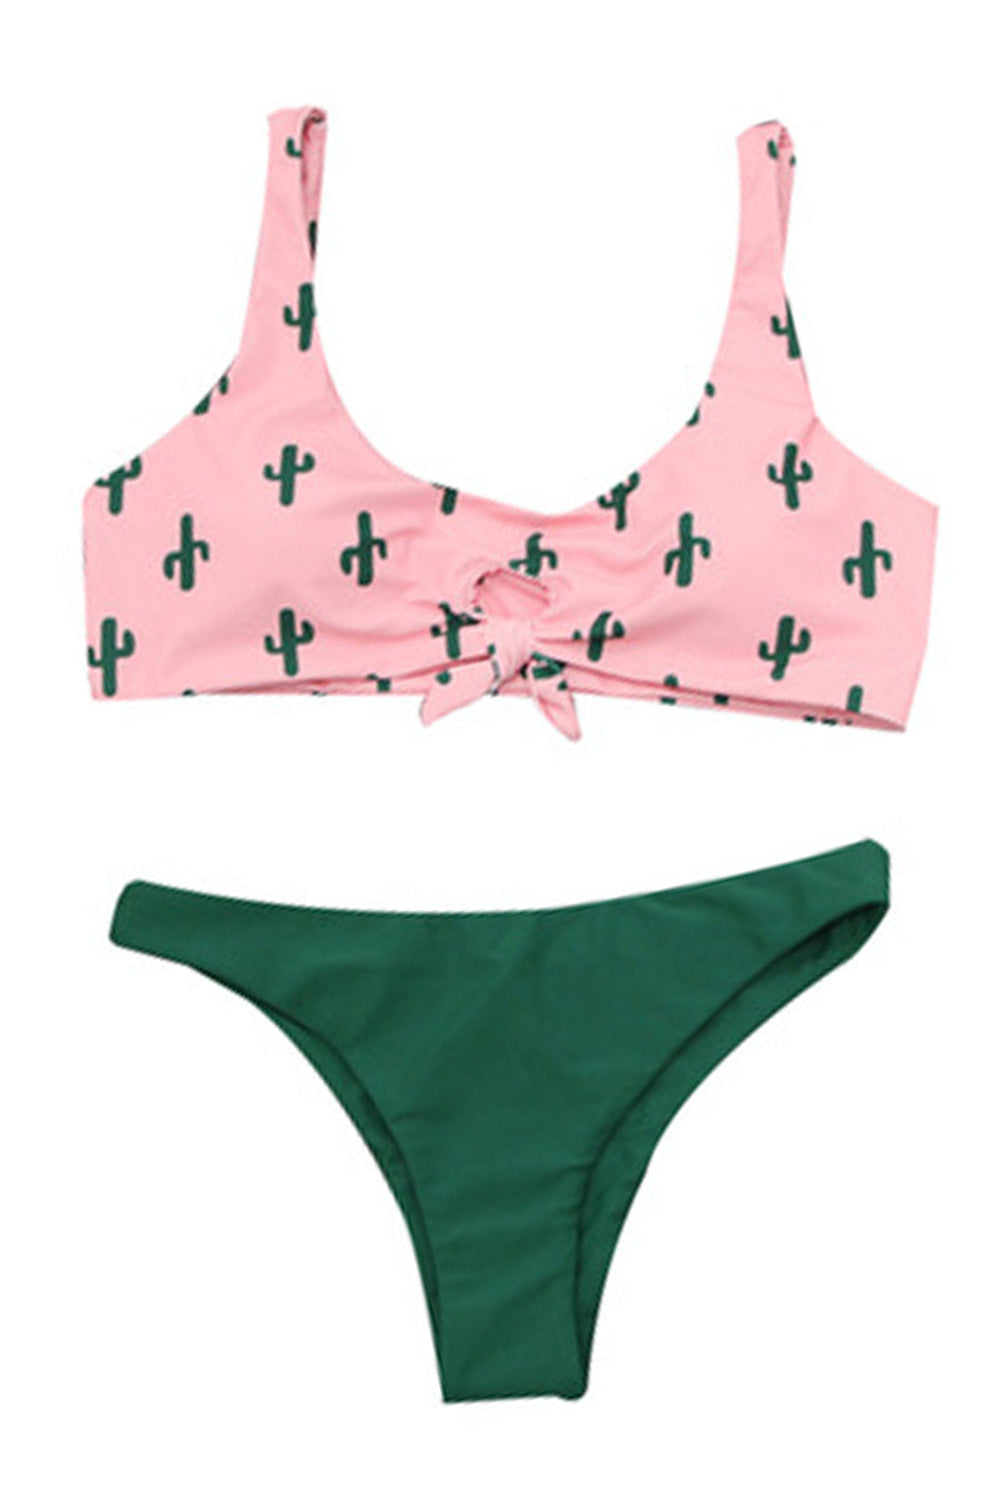 Iyasson Cactus Print Bikini with Bowknot